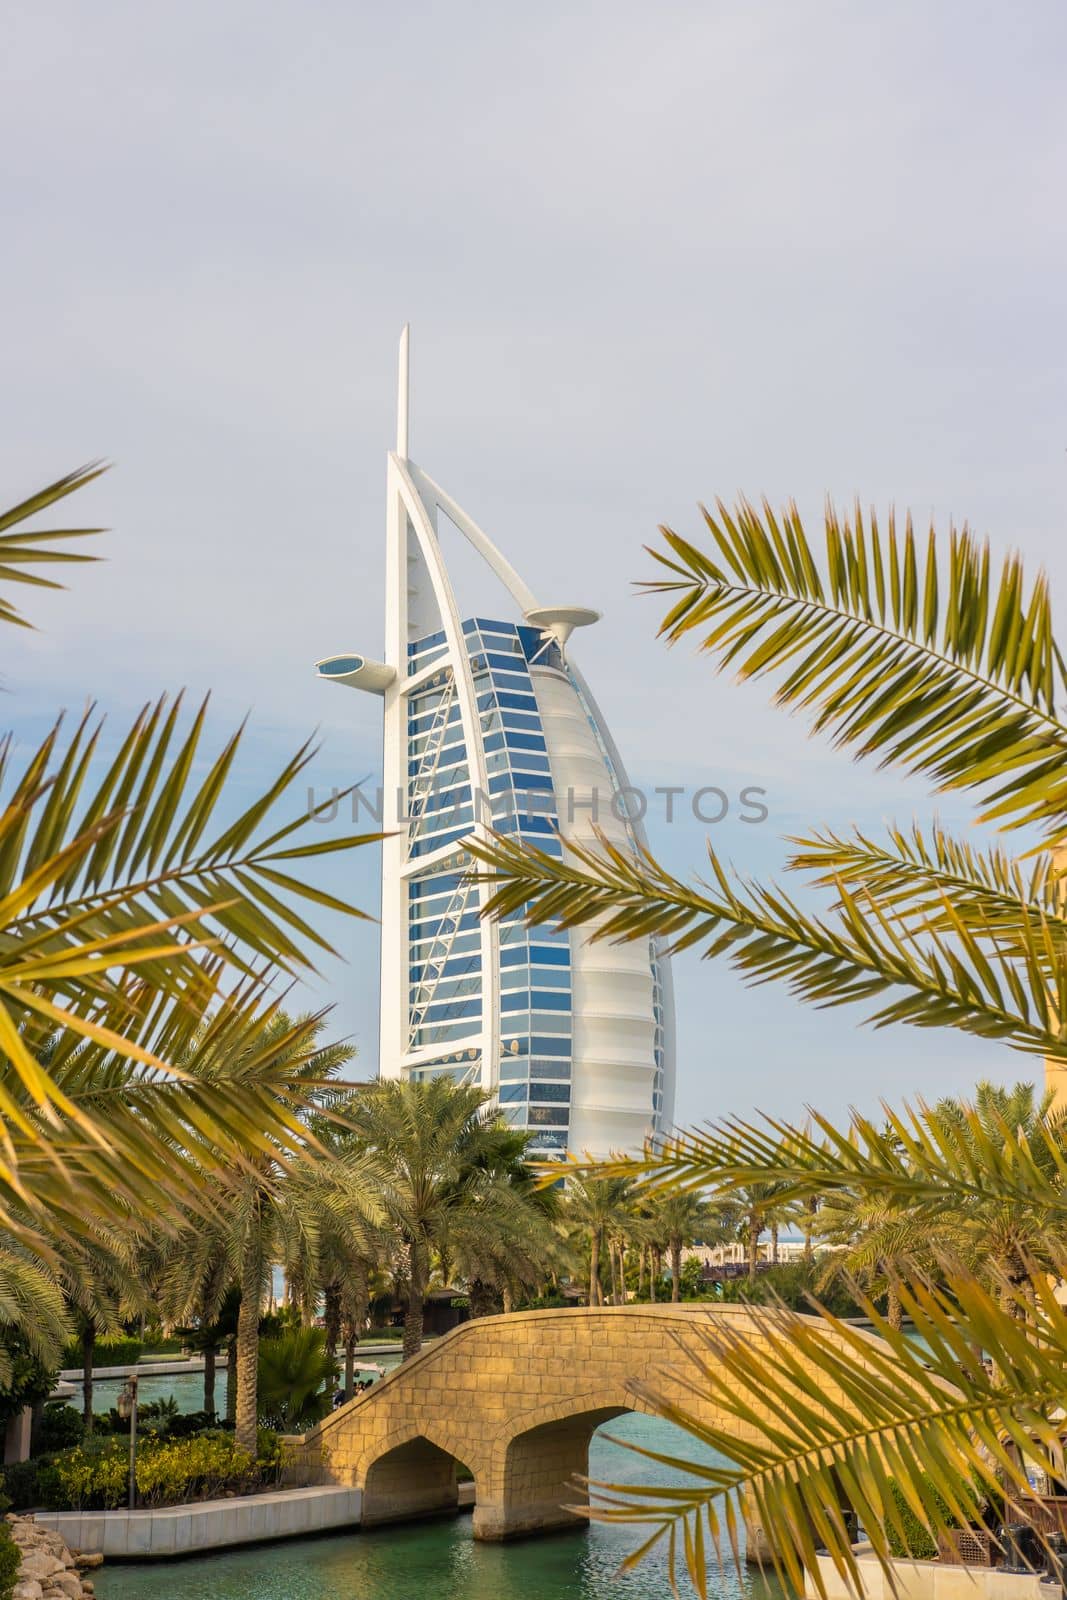 Dubai, UAE - December 14, 2019: Burj al arab hotel in Dubai during the day and amid palm trees. by DovidPro